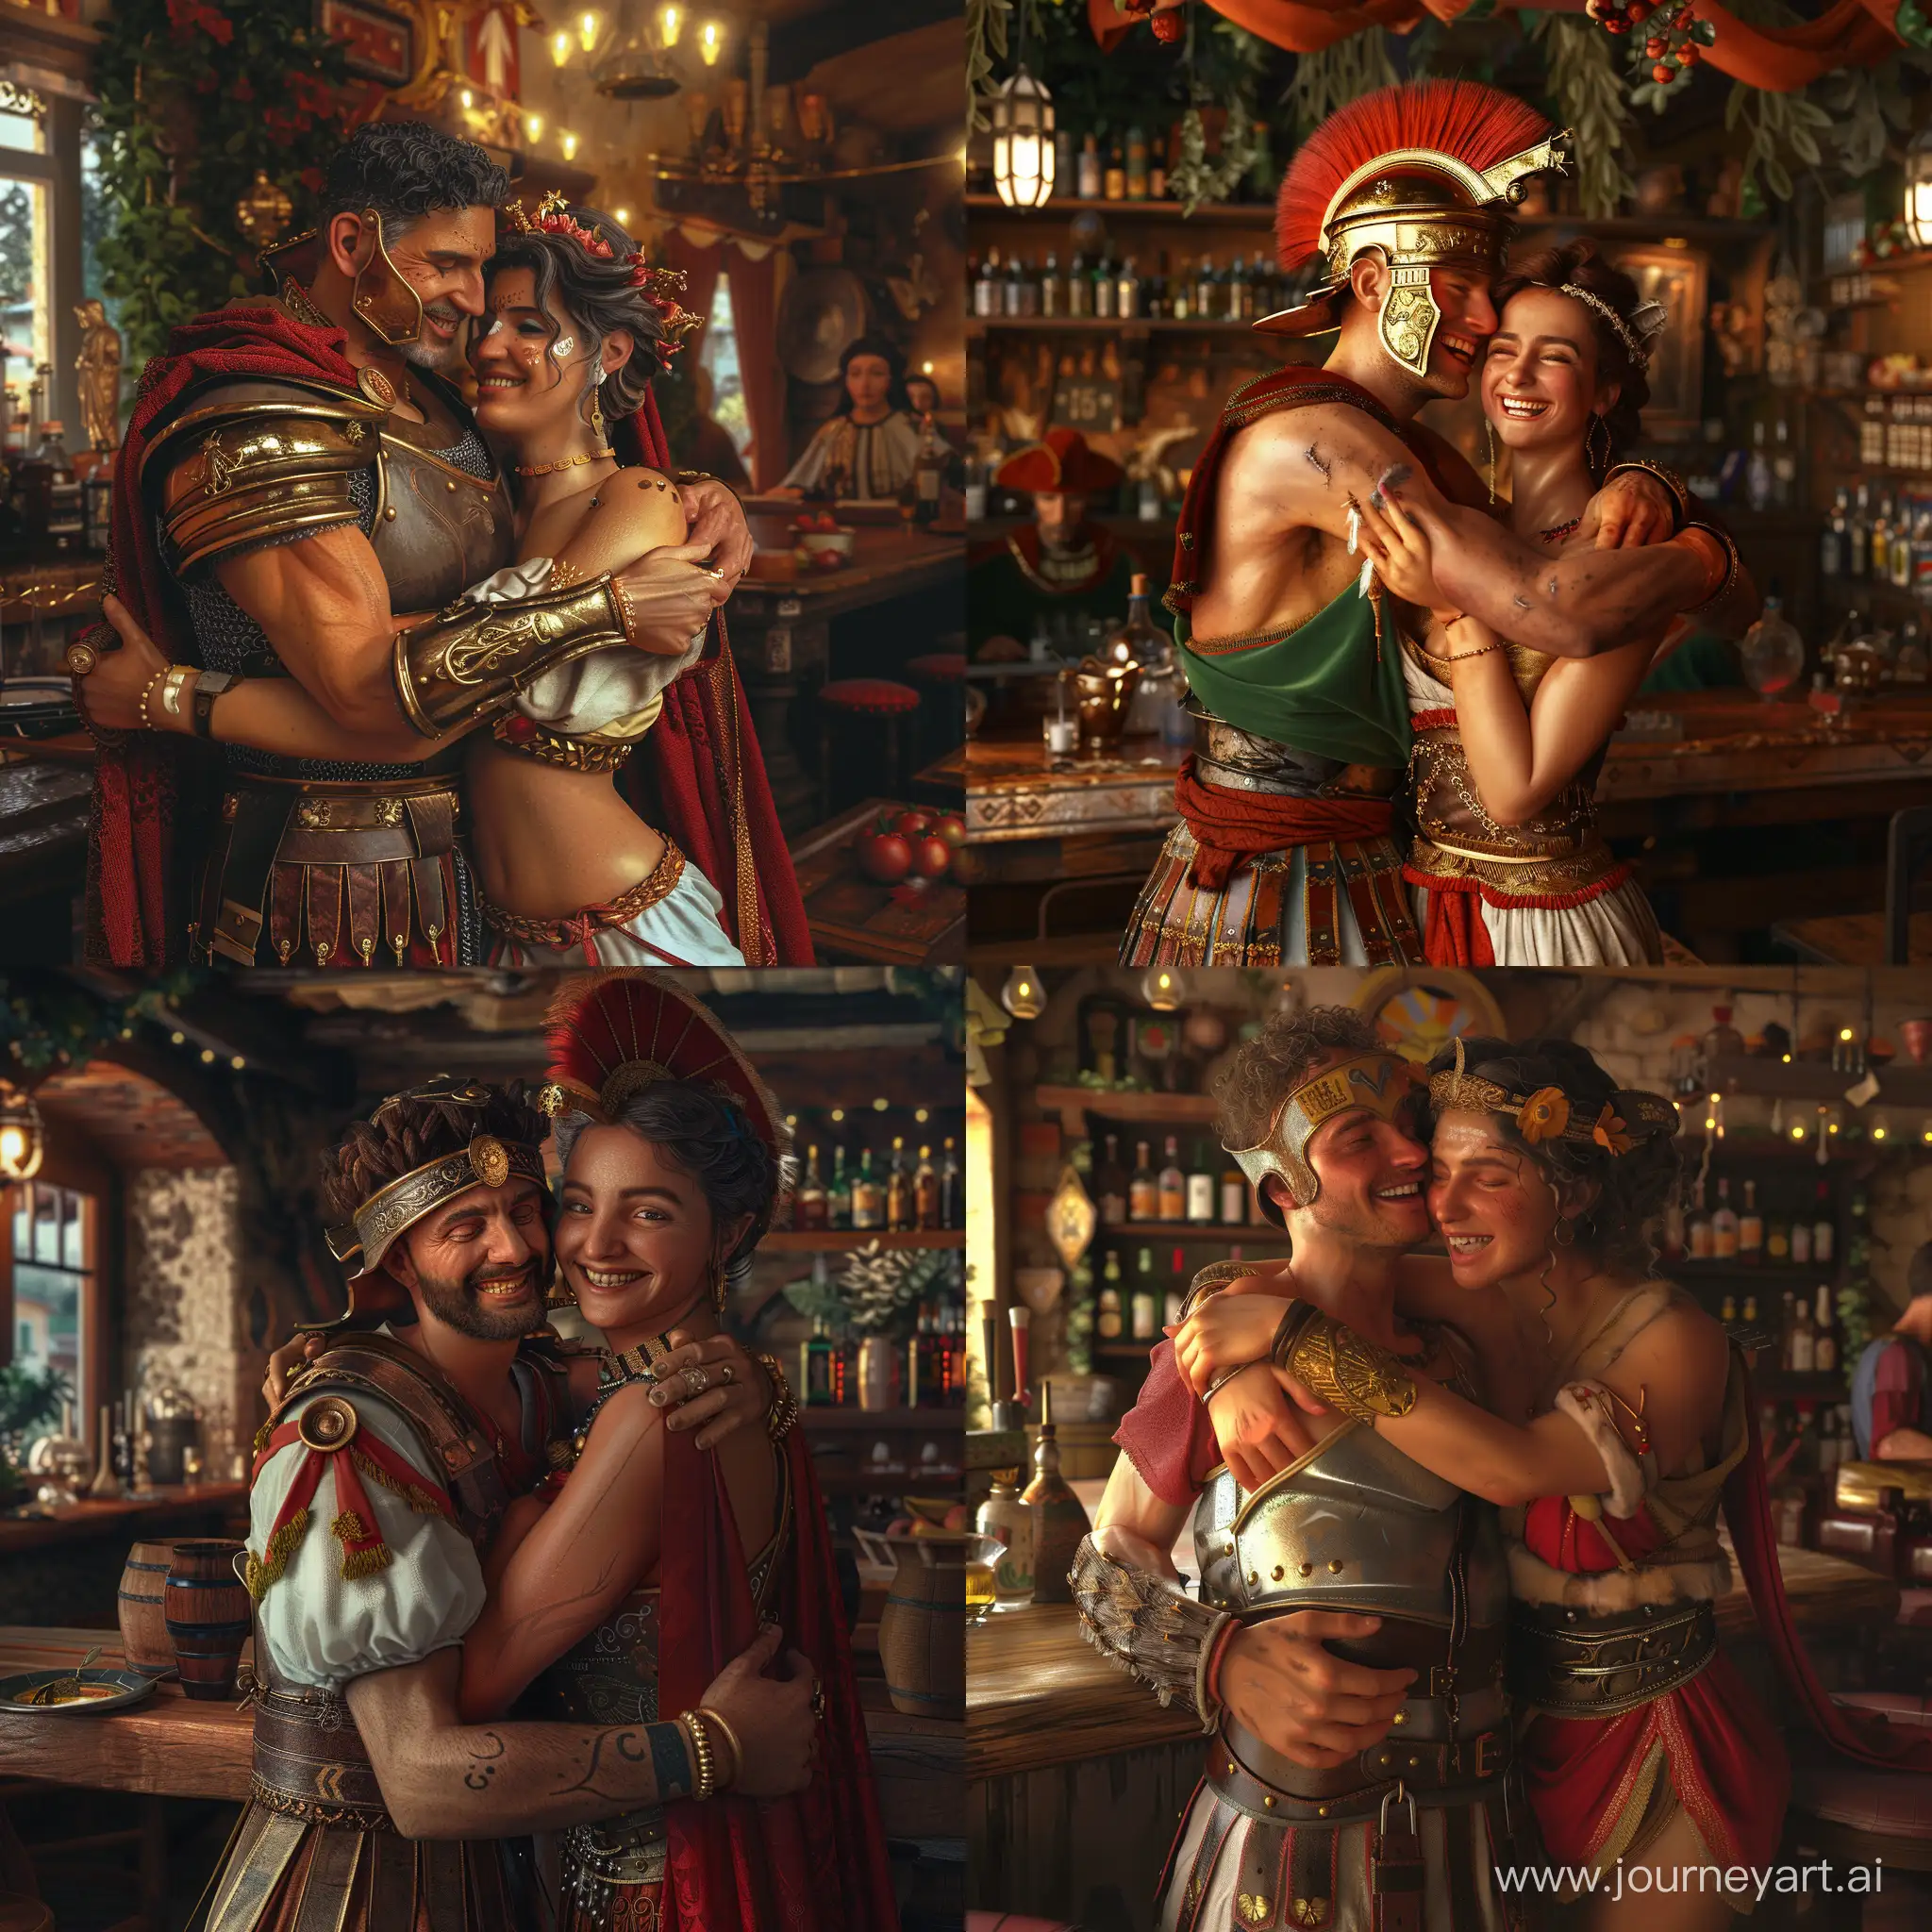 Cheerful-Italian-Legionary-Warrior-Embraces-Beautiful-Greek-Woman-in-Hyperrealistic-Tavern-Scene